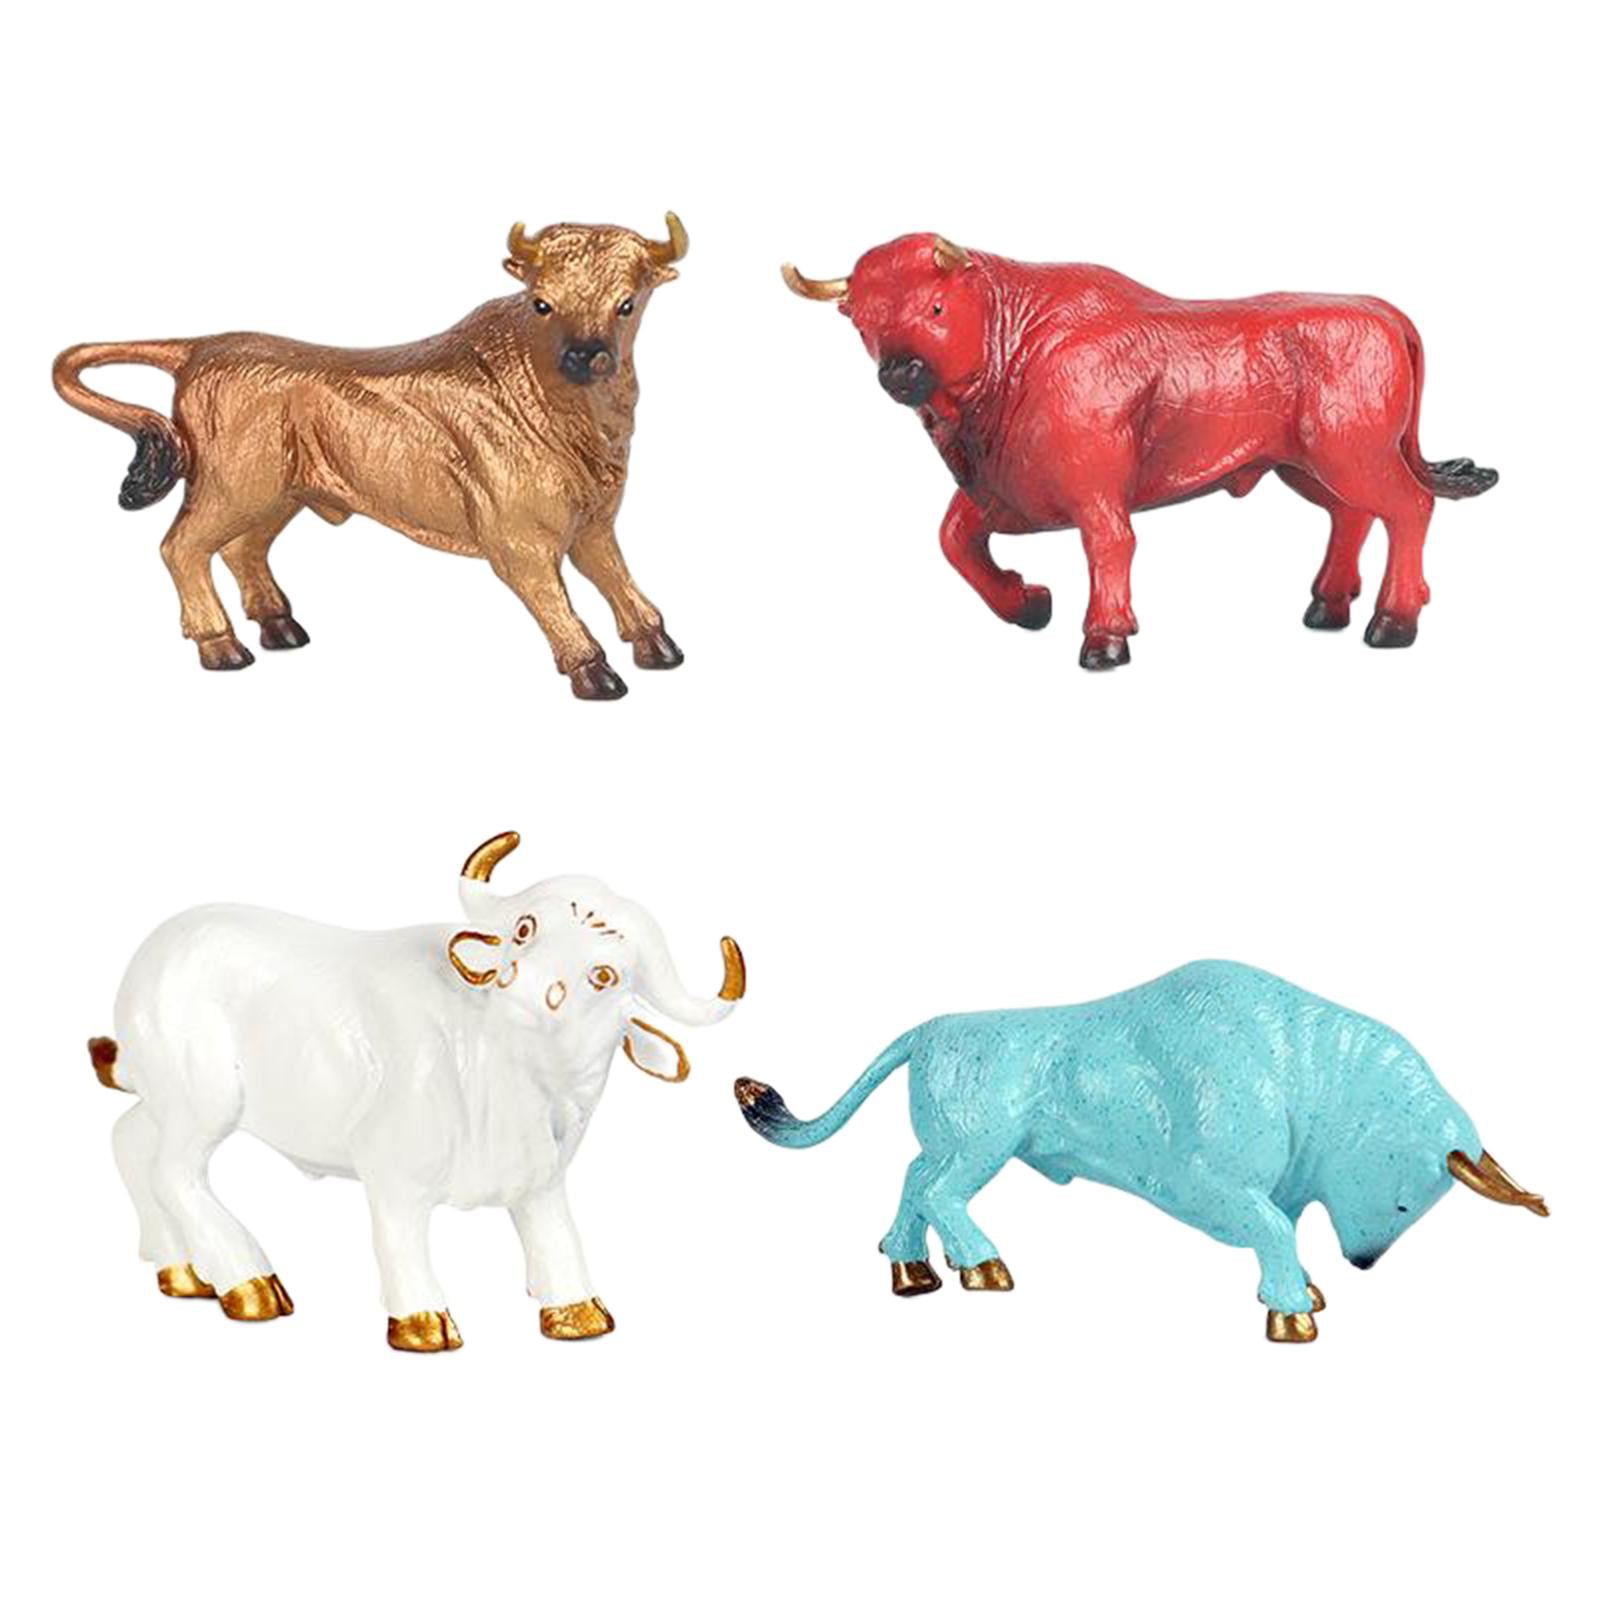 Details about   Farm Milk Cow Animals Action Figures Cattle Calf Figurine Animal Miniature 